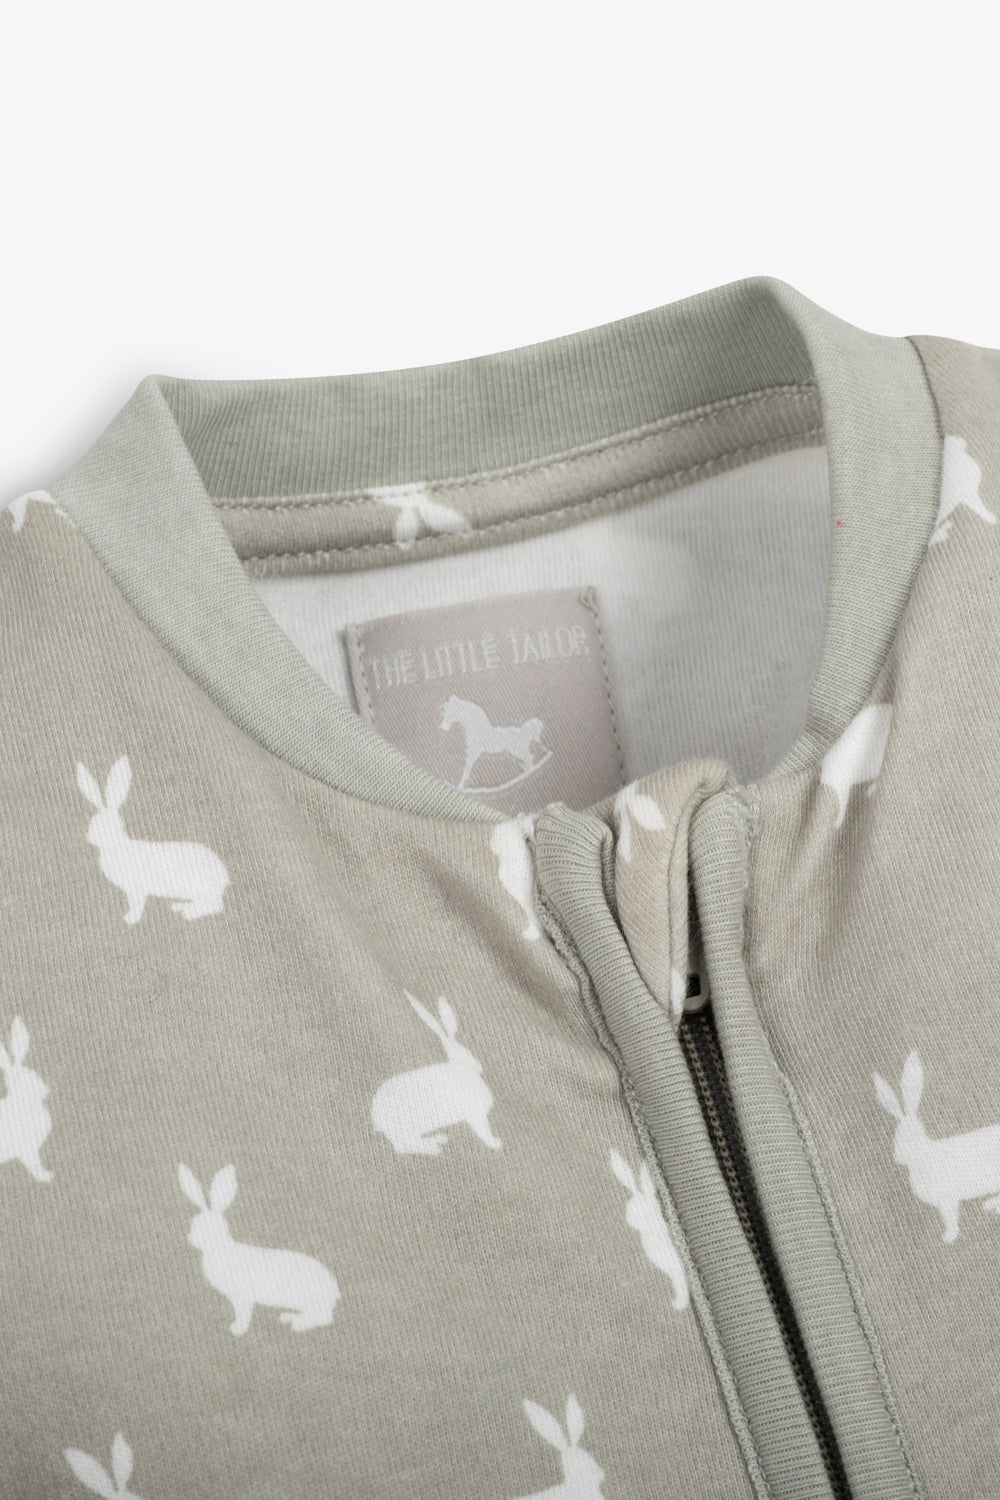 Sleepsuit/Onesie, fawn hare print